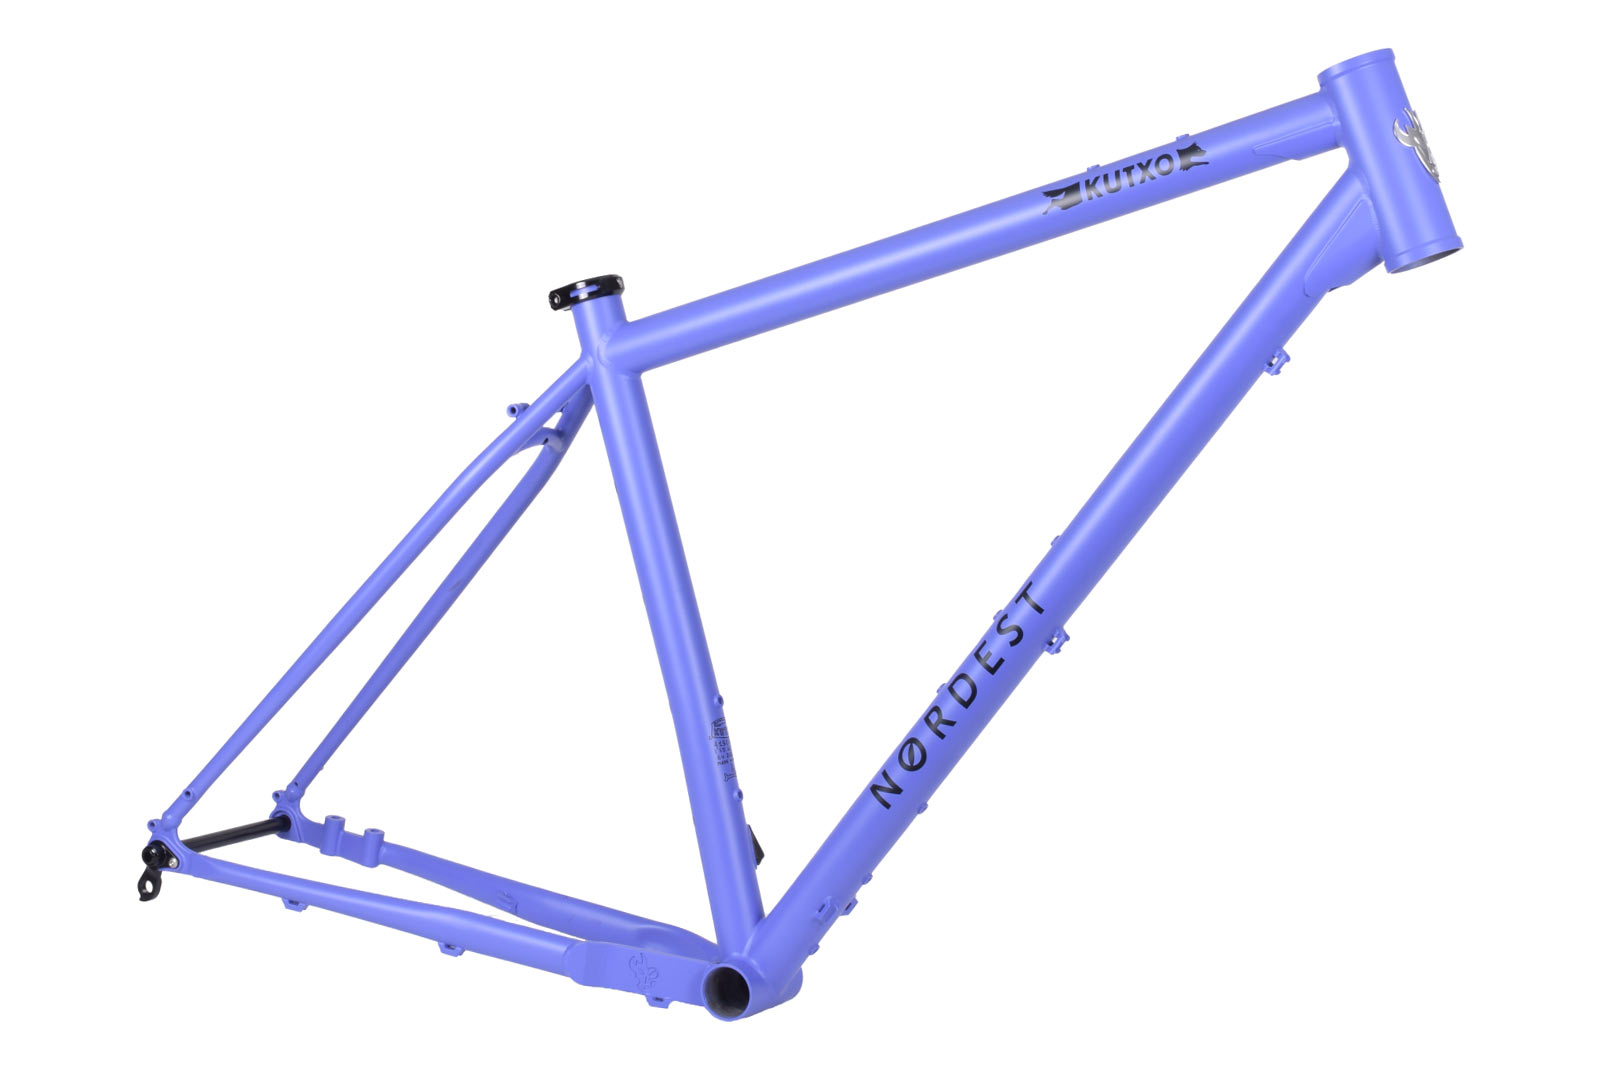 Nordest Kutxo affordable 4130 steel monster gravel dropbar MTB adventure bike, purple frame